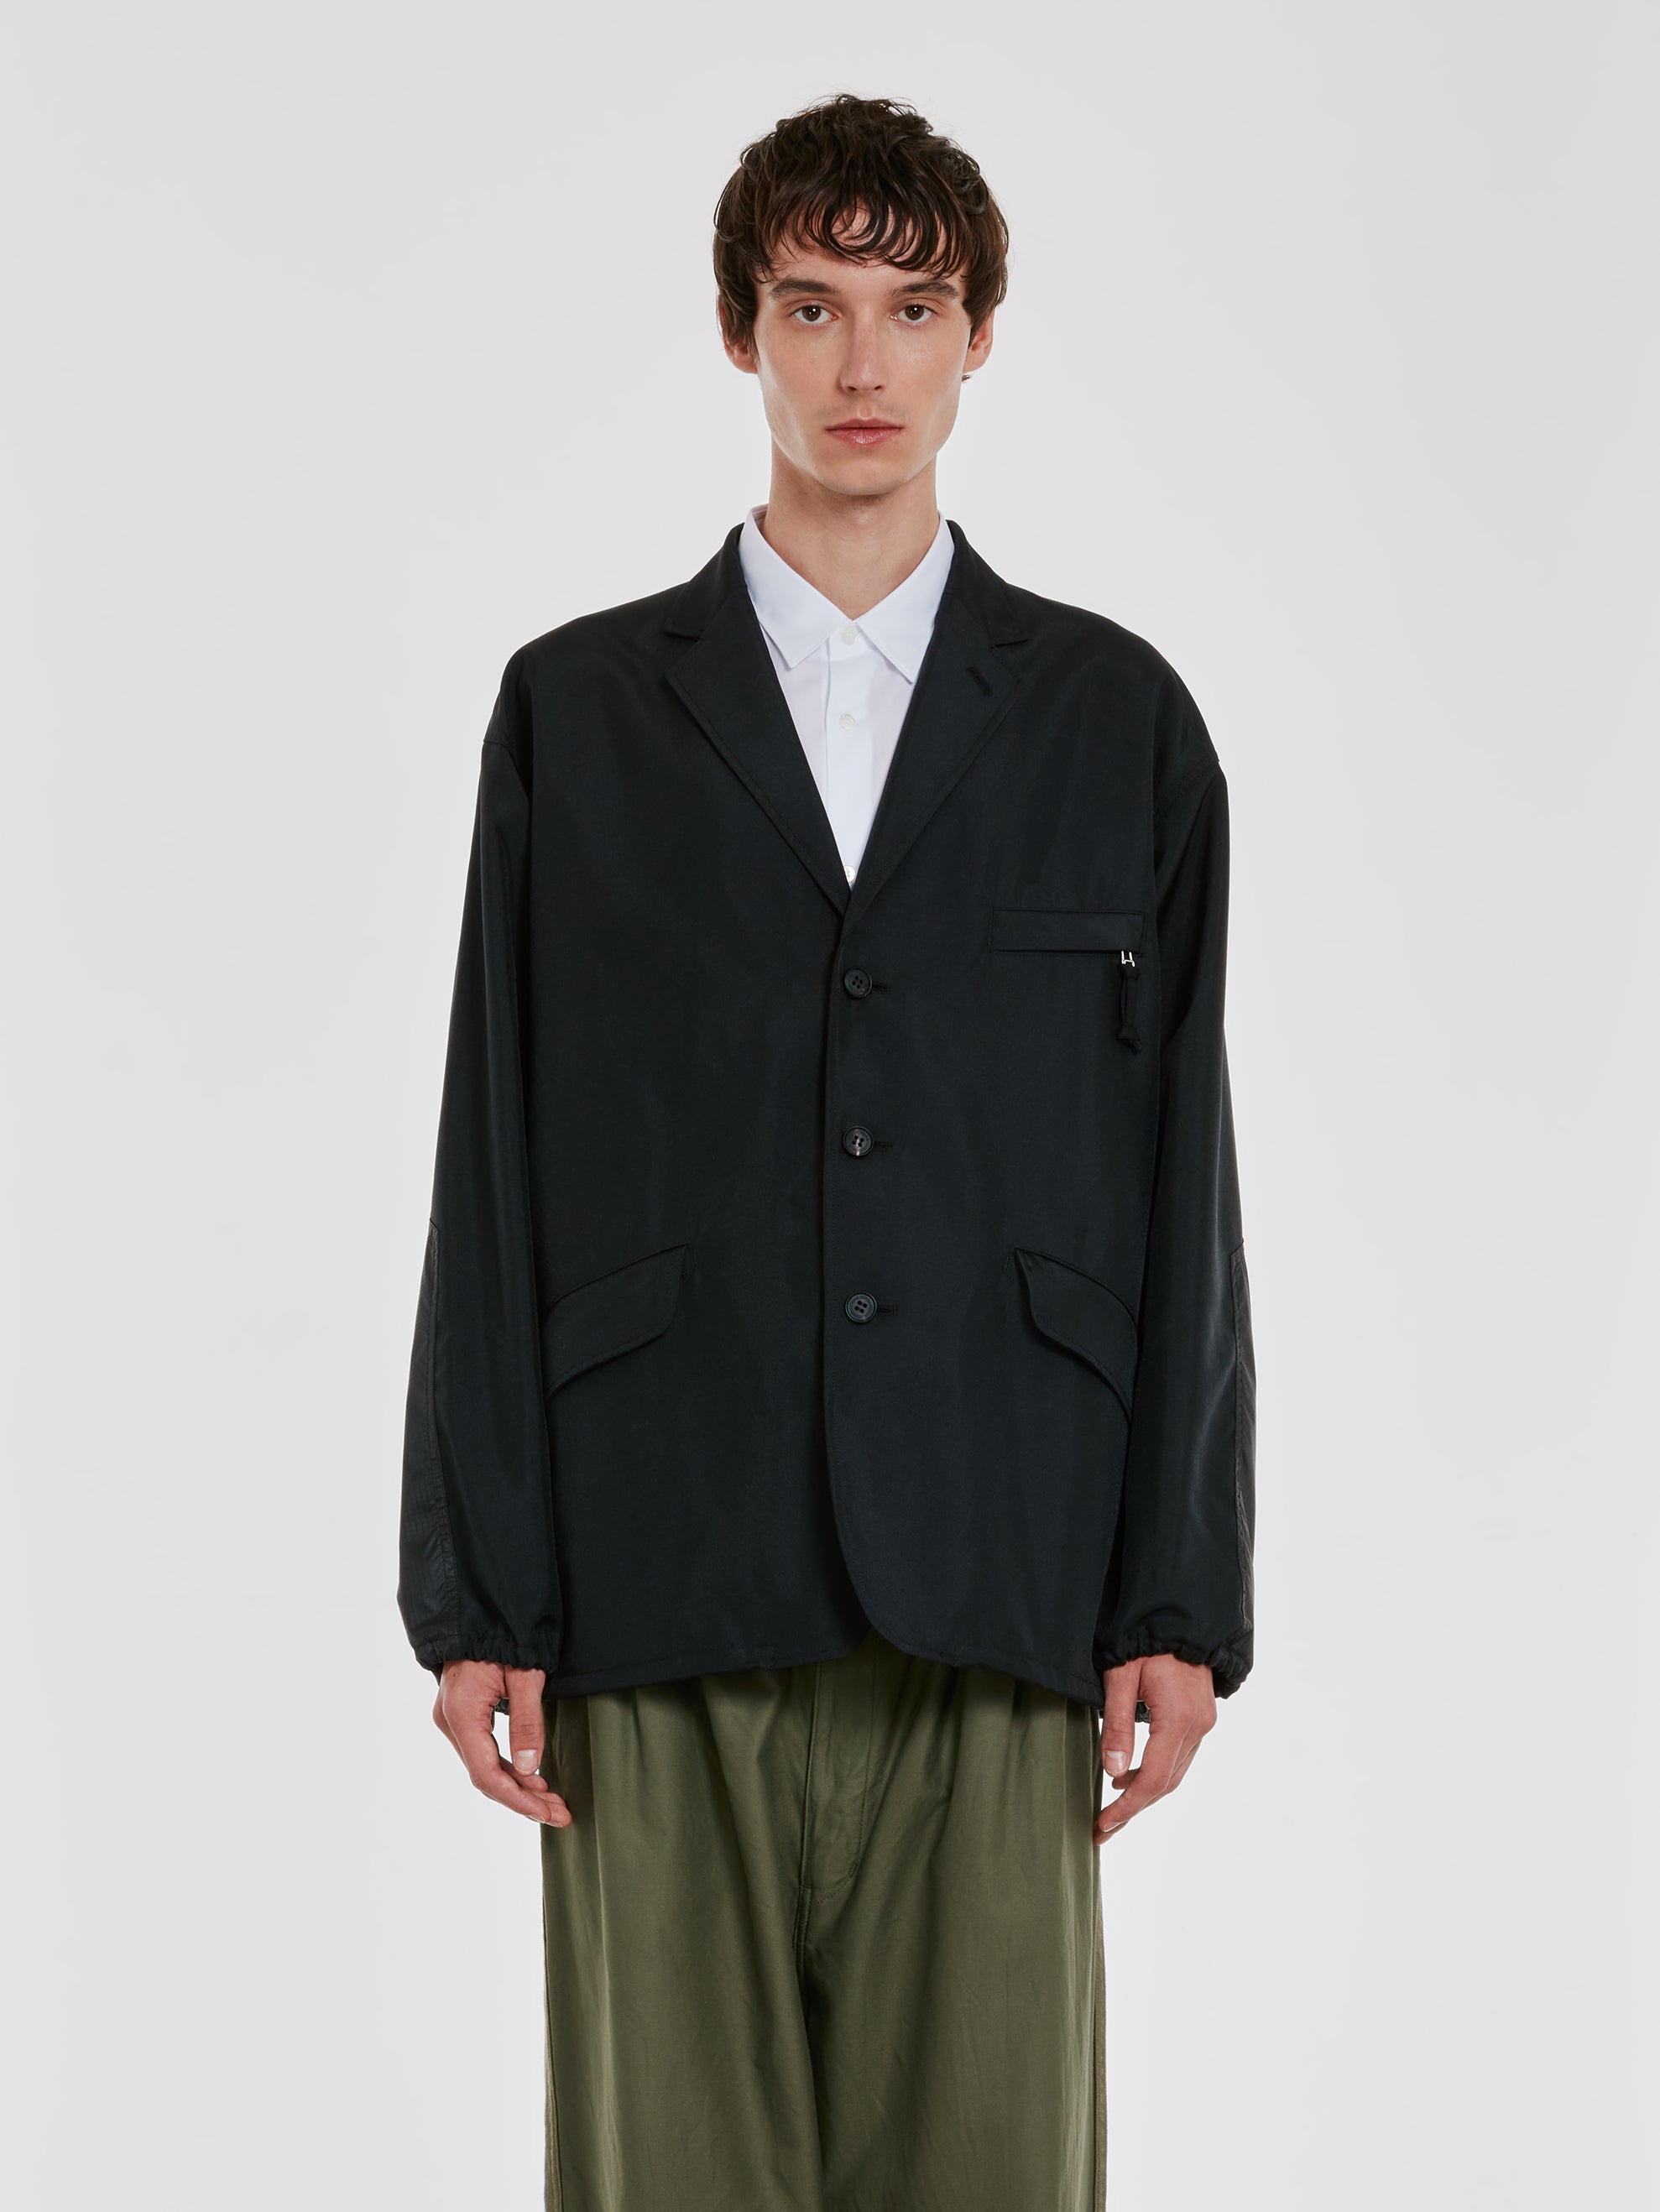 Comme des Garçons Homme - Men’s Polyester Relaxed Jacket - (Black) view 1